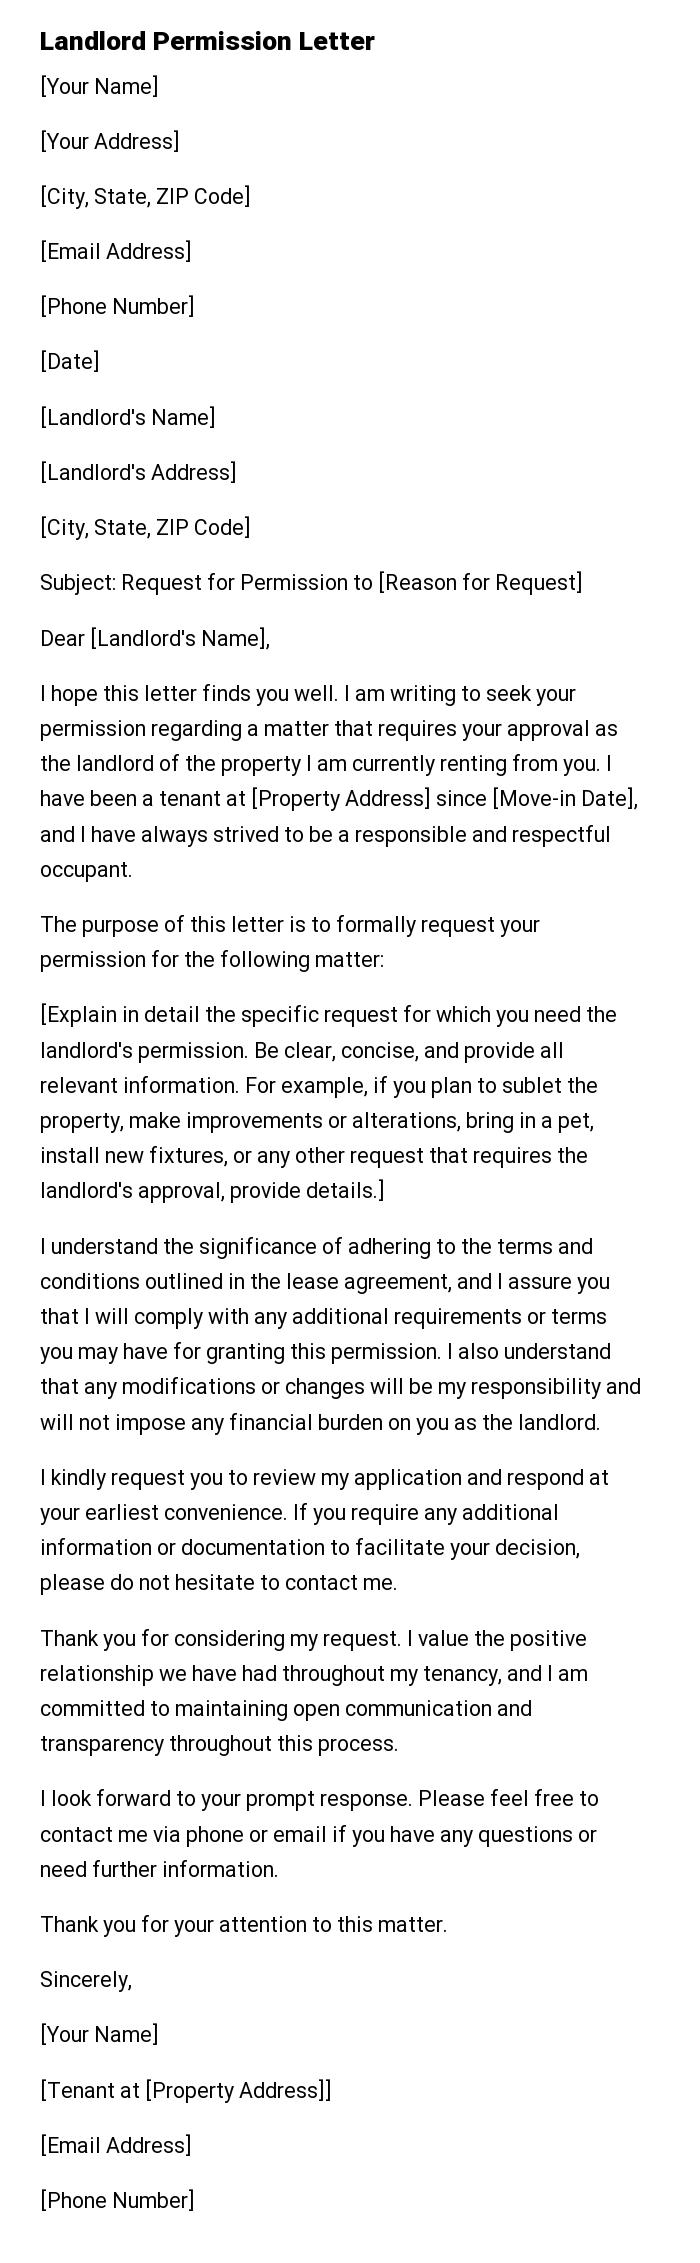 Landlord Permission Letter